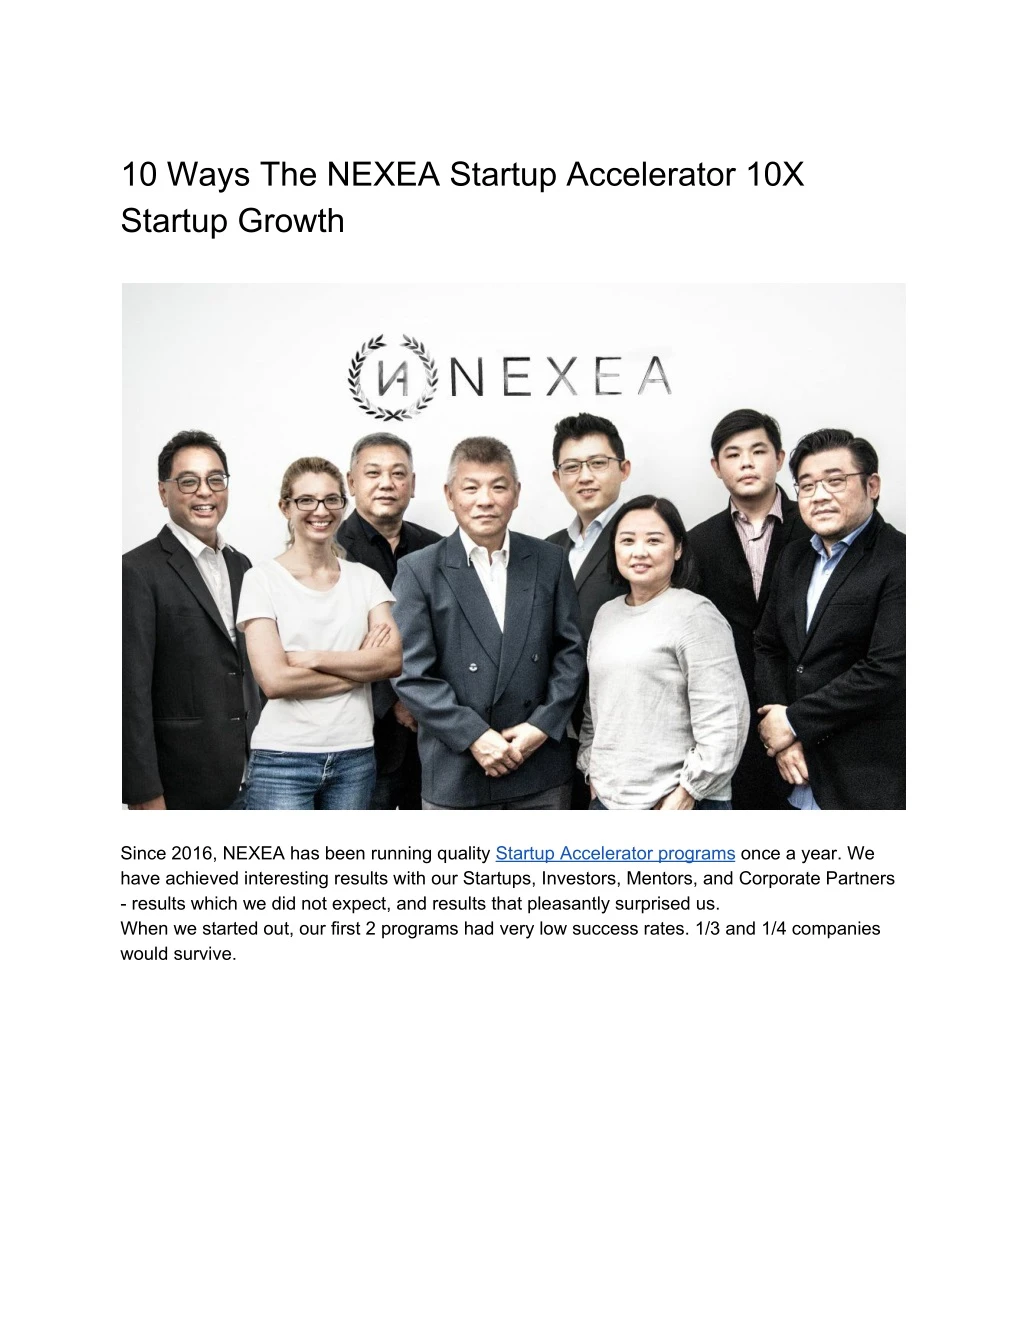 10 ways the nexea startup accelerator 10x startup